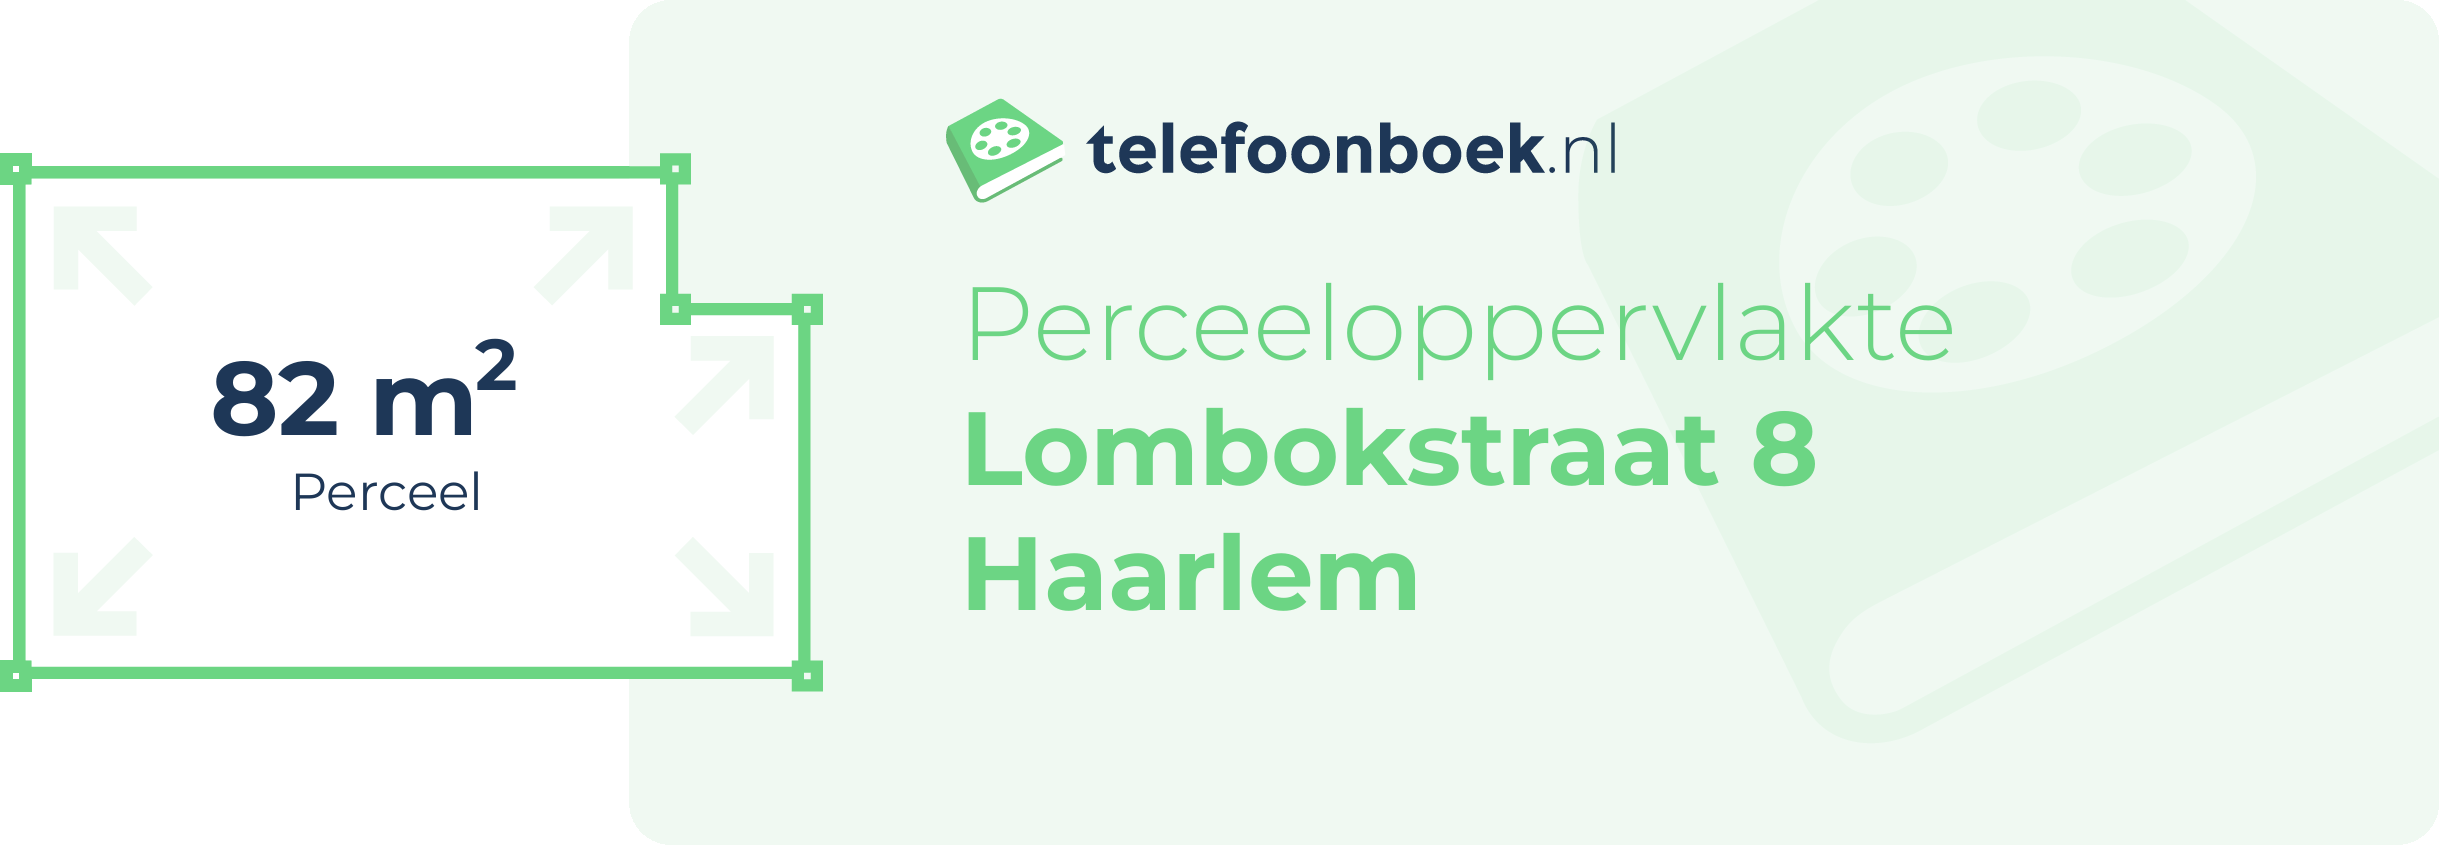 Perceeloppervlakte Lombokstraat 8 Haarlem